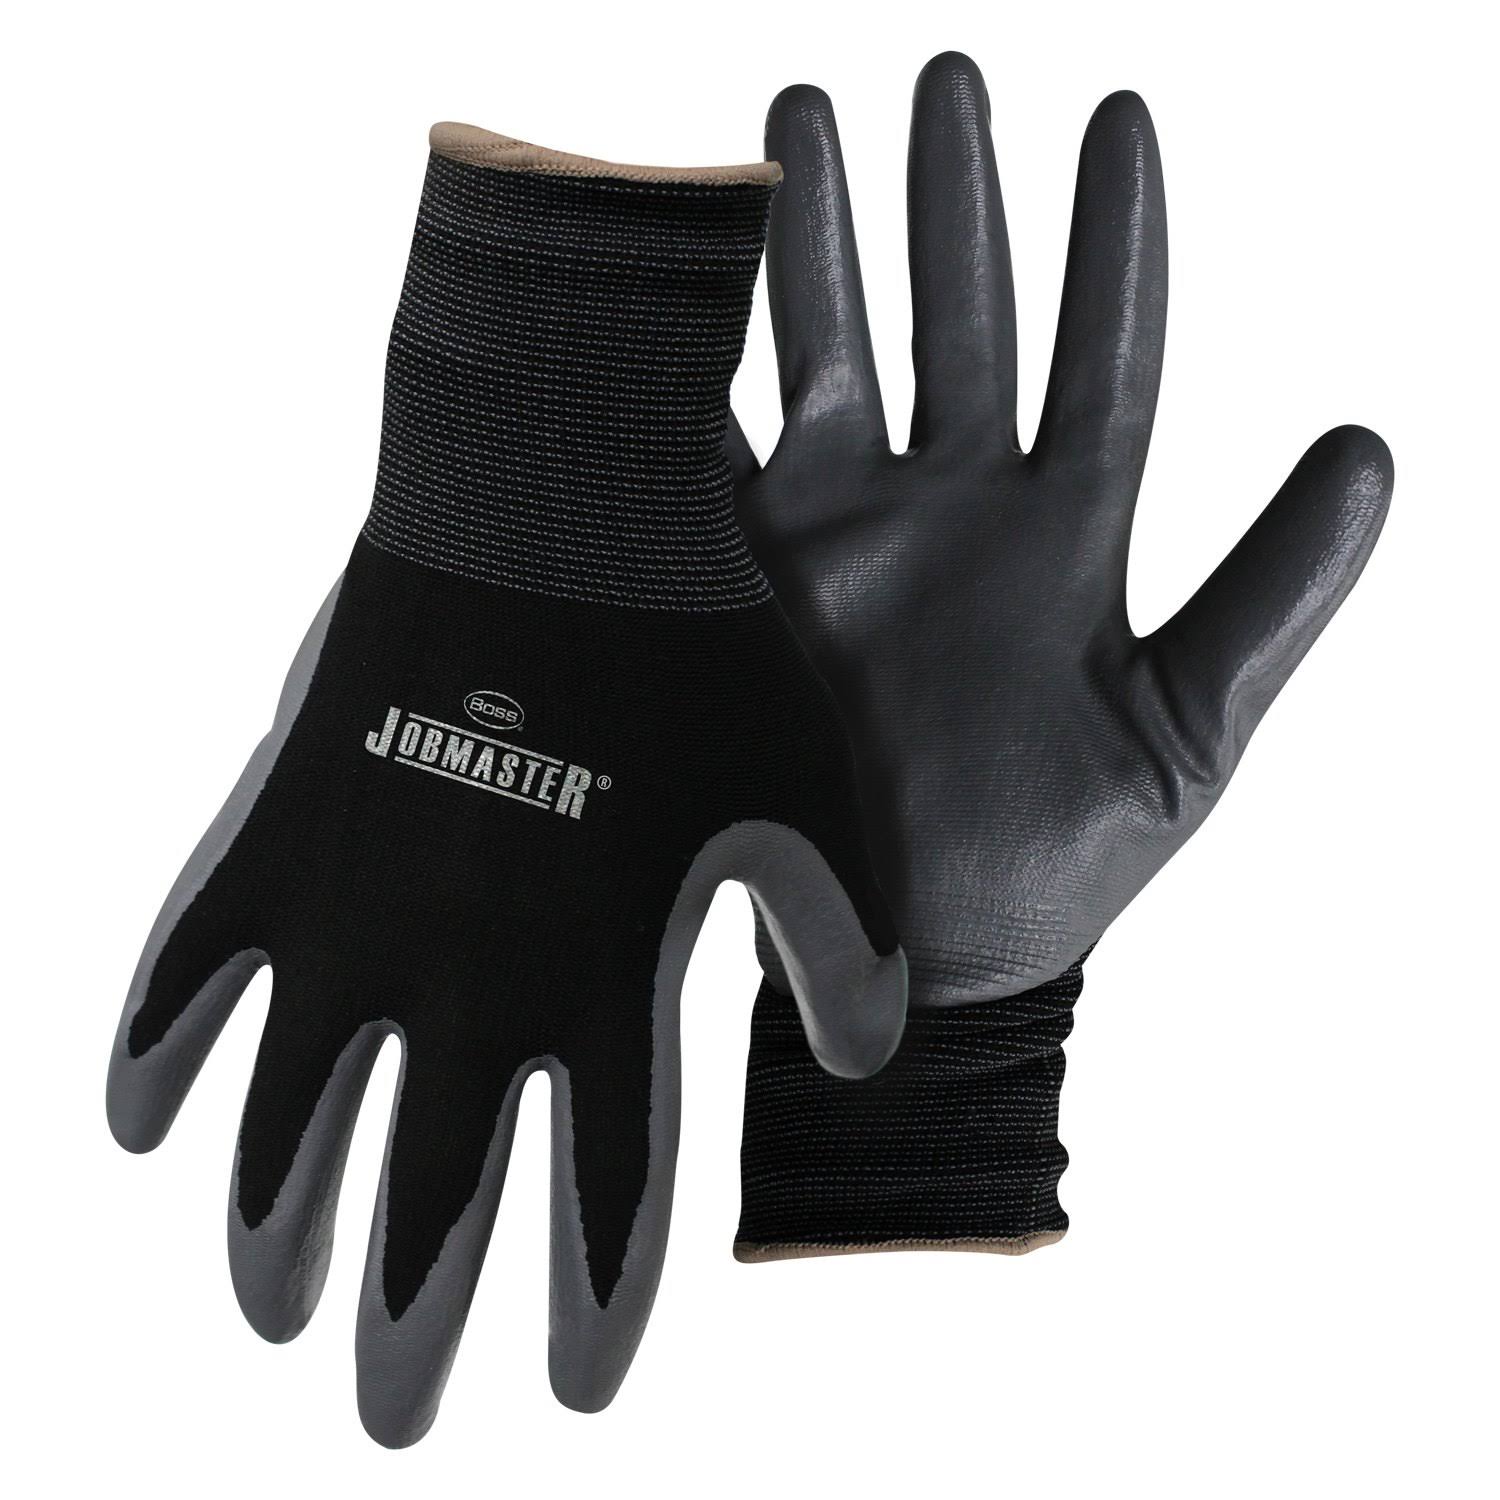 Boss Manufacturing for Men Jobmaster Nylon Gloves - with Nitrile Palm, Large, Black